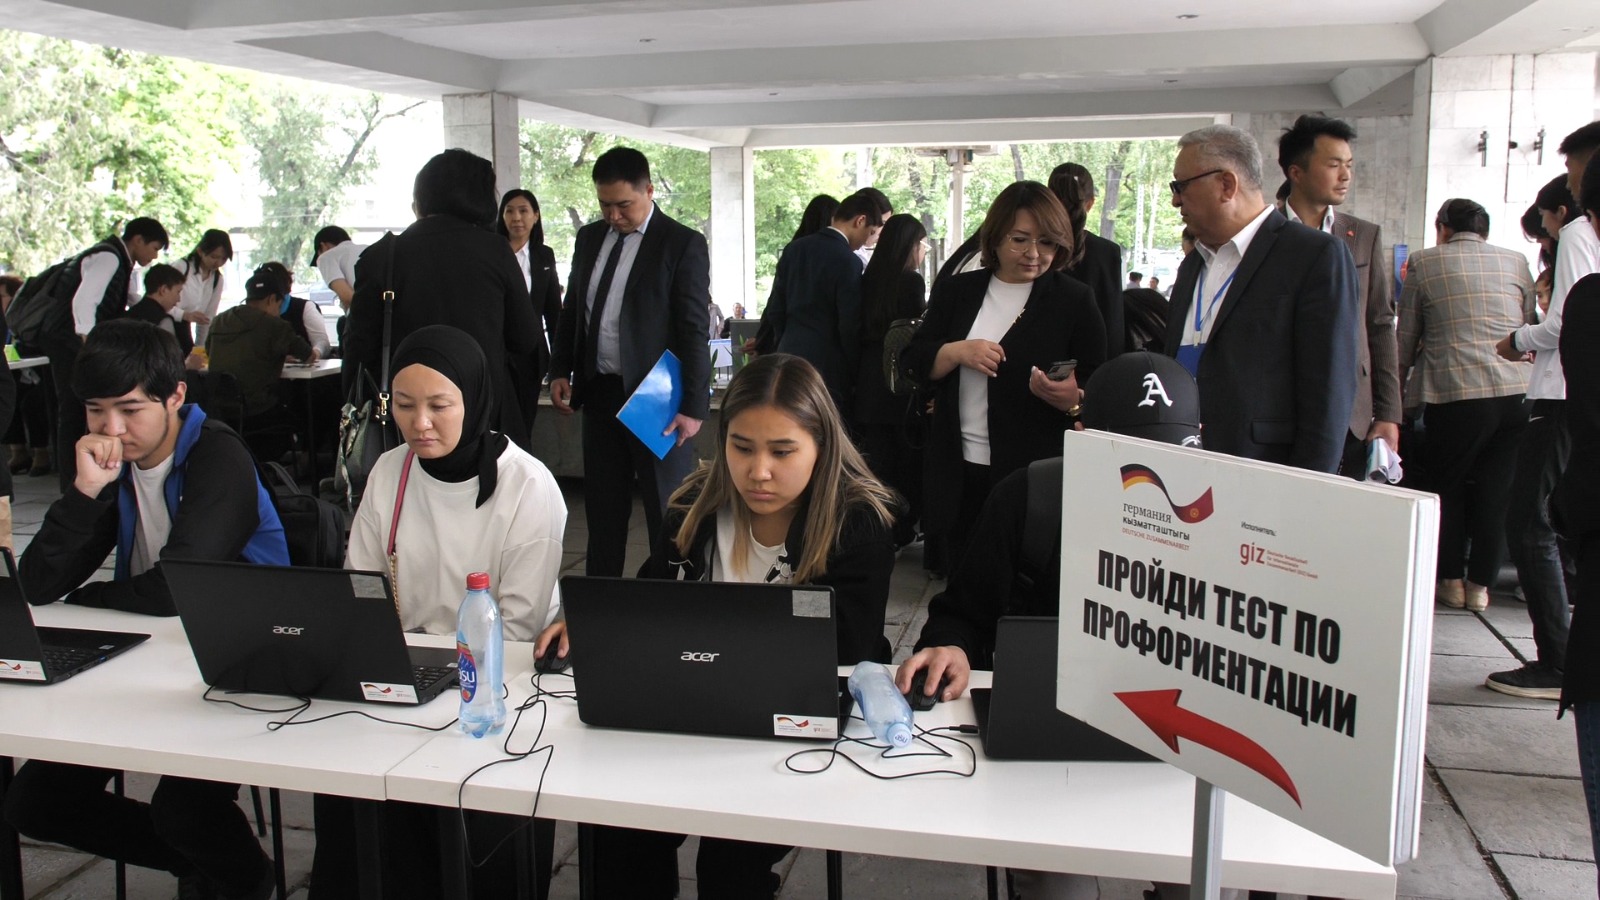 7e2fcb0c 7689 40a0 8dc1 9519a28e4960 Более 70 ведущих компаний приняли участие в ярмарке вакансий в Бишкеке